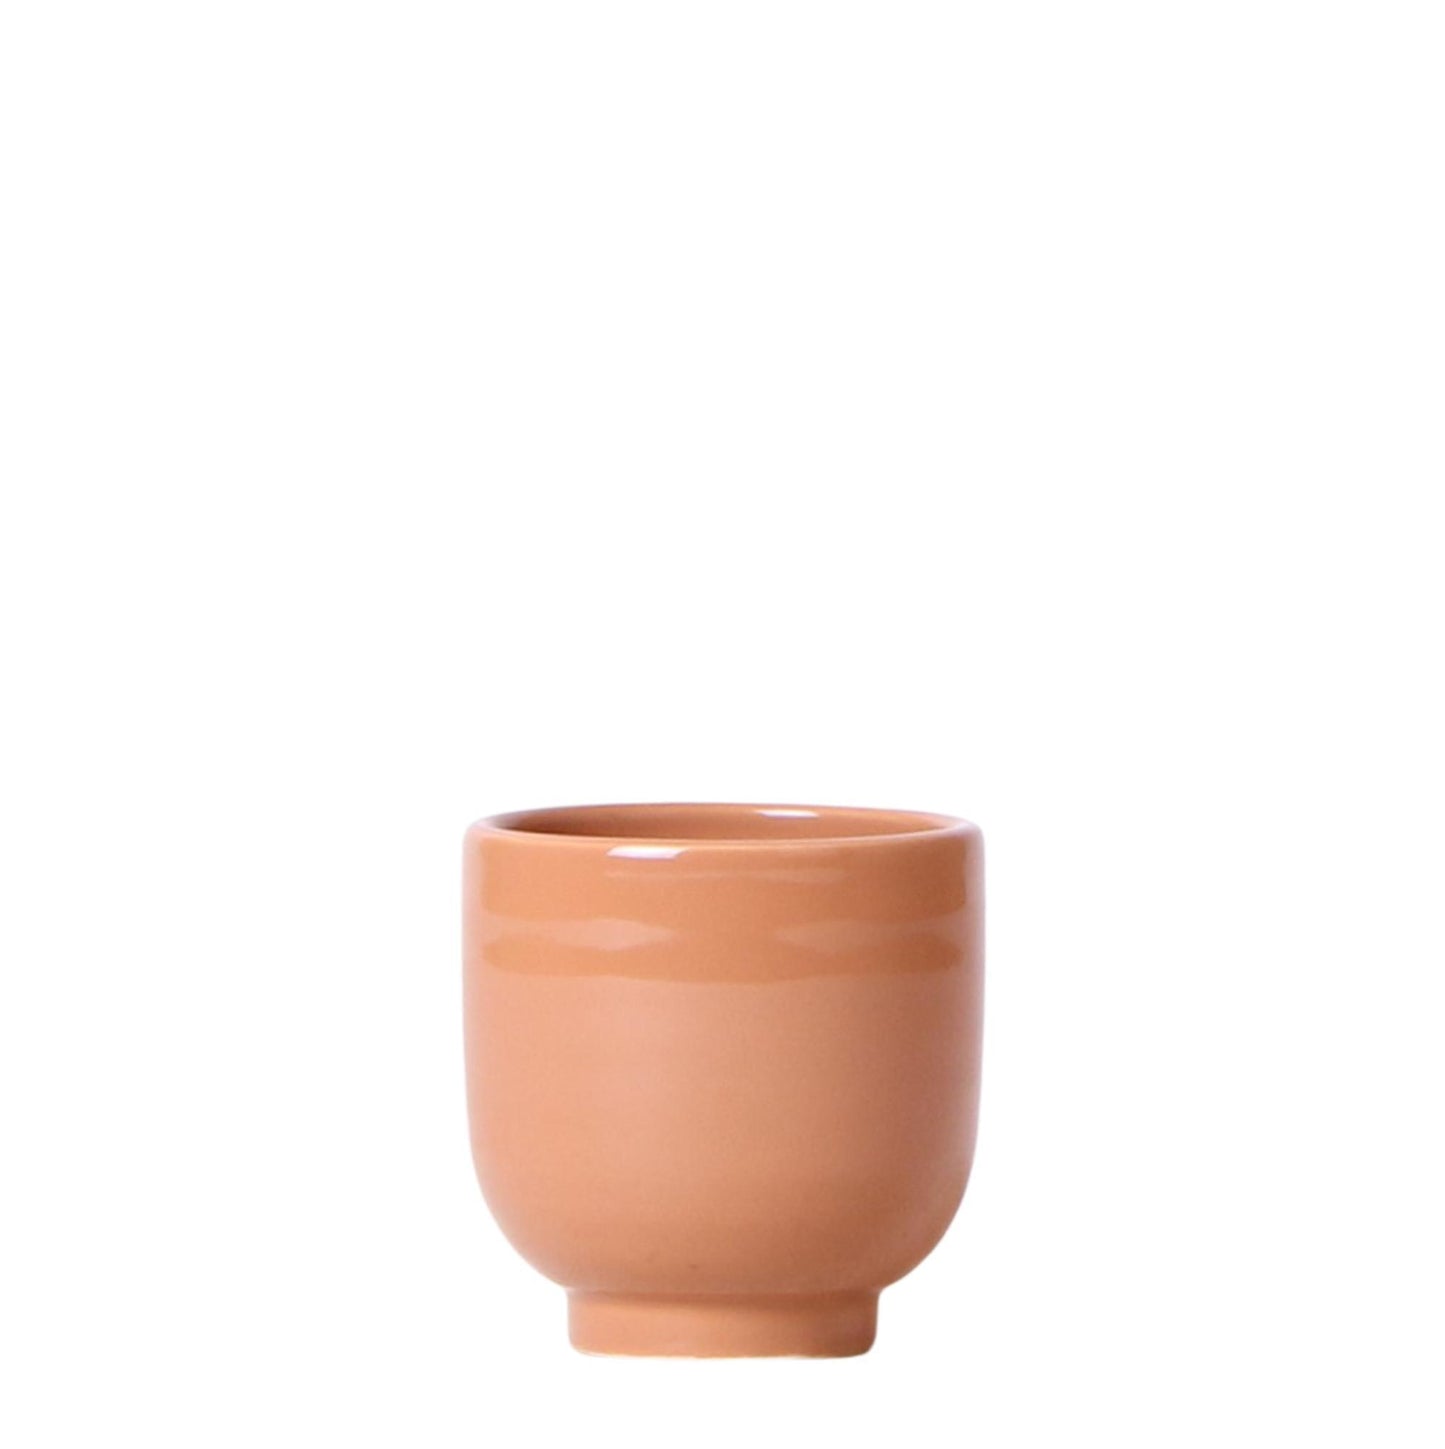 Hummingbird Home | Glazed flowerpot - Cognac ceramic ornamental pot with gloss - pot size Ø6cm